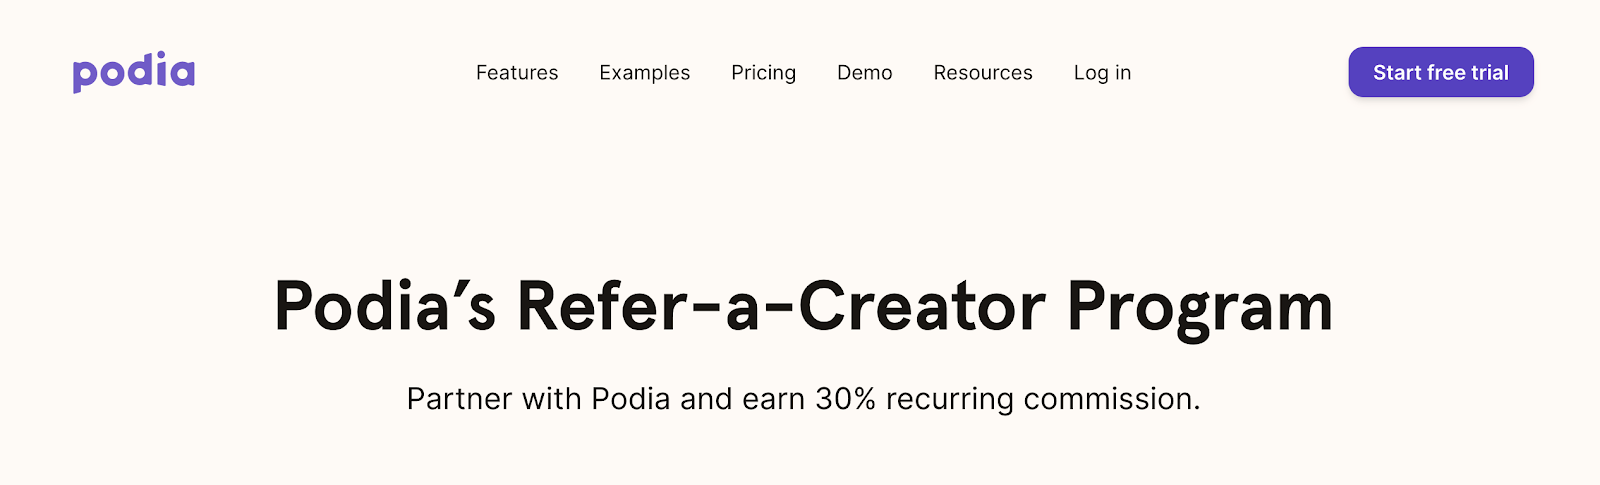 Podia's Refer-A-Creator Program Landing Page Screenshot